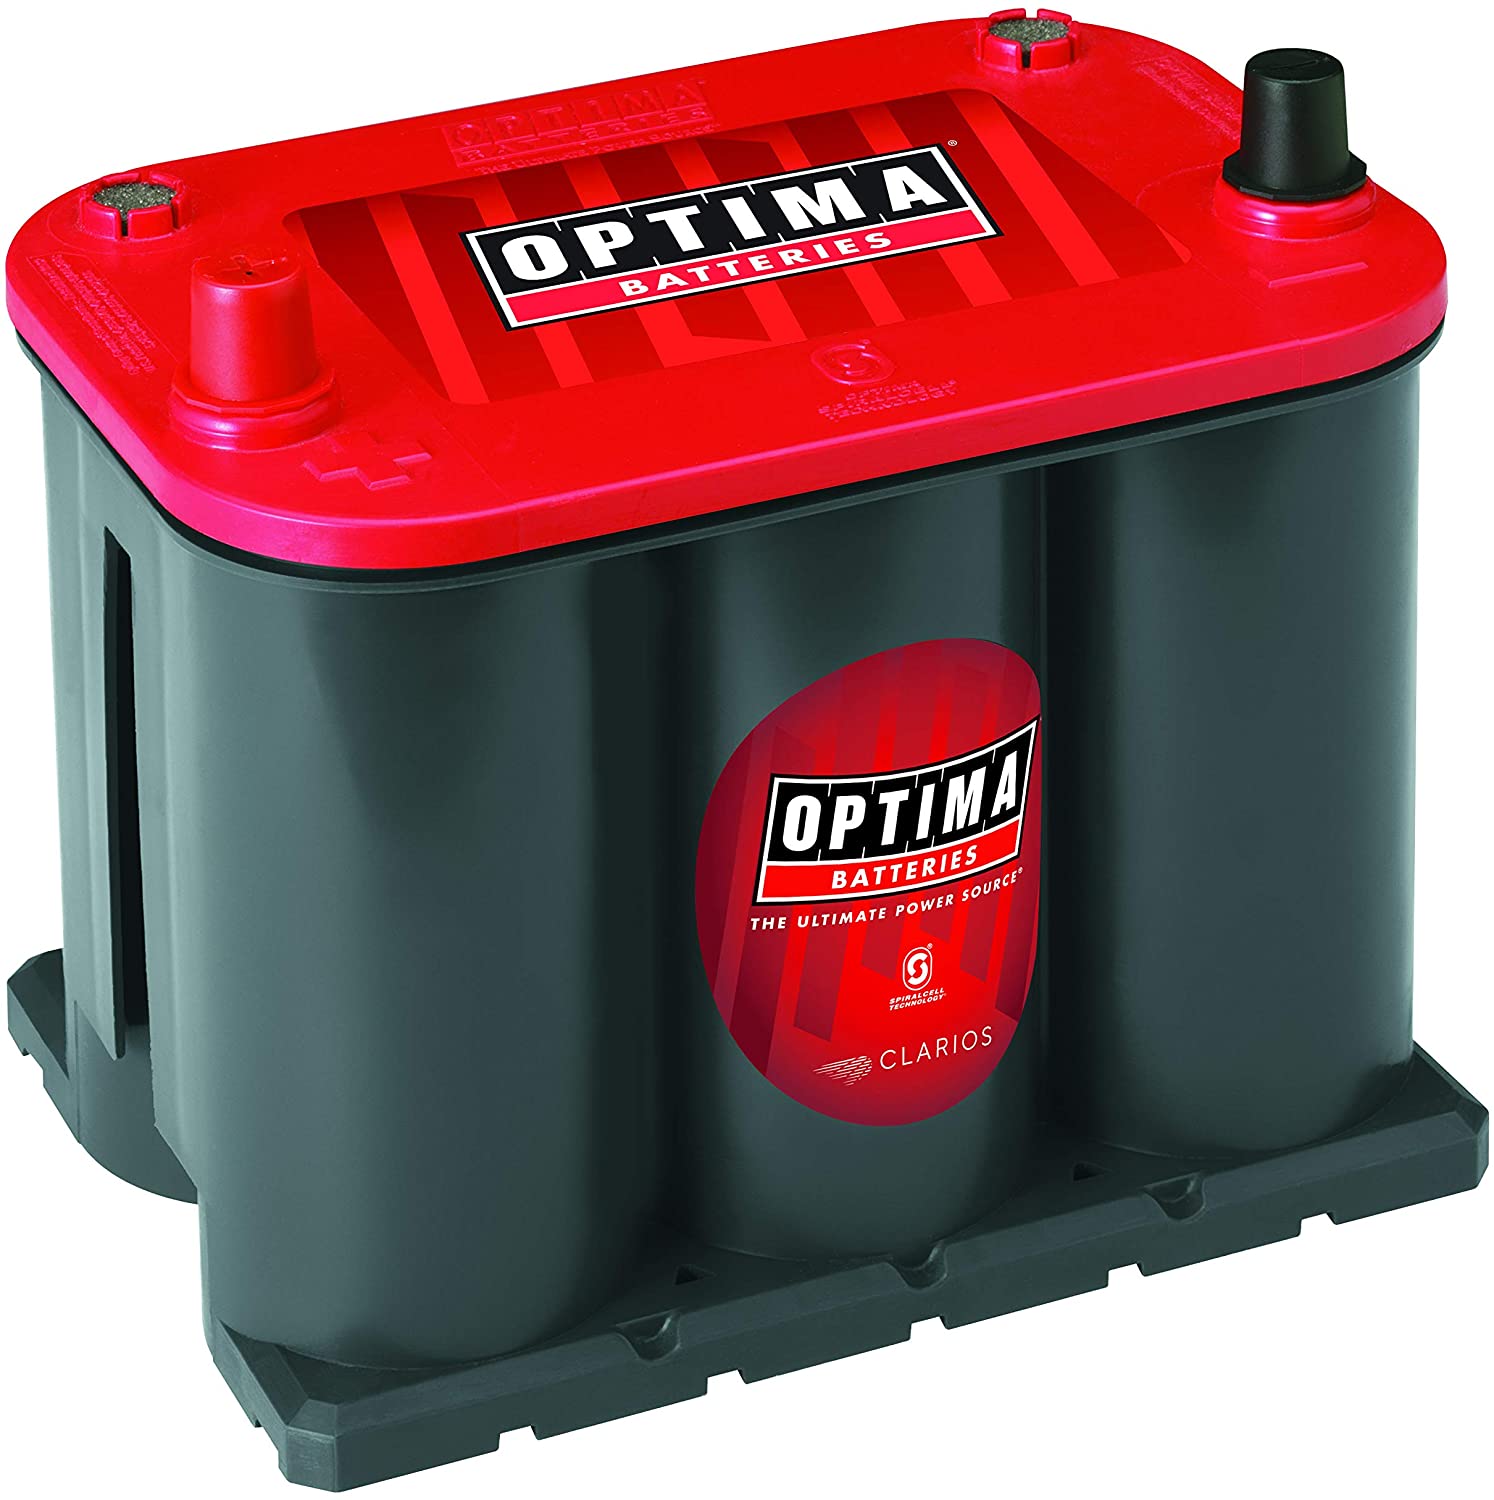 Optima 8025-160 25 RedTop Starting Car Battery